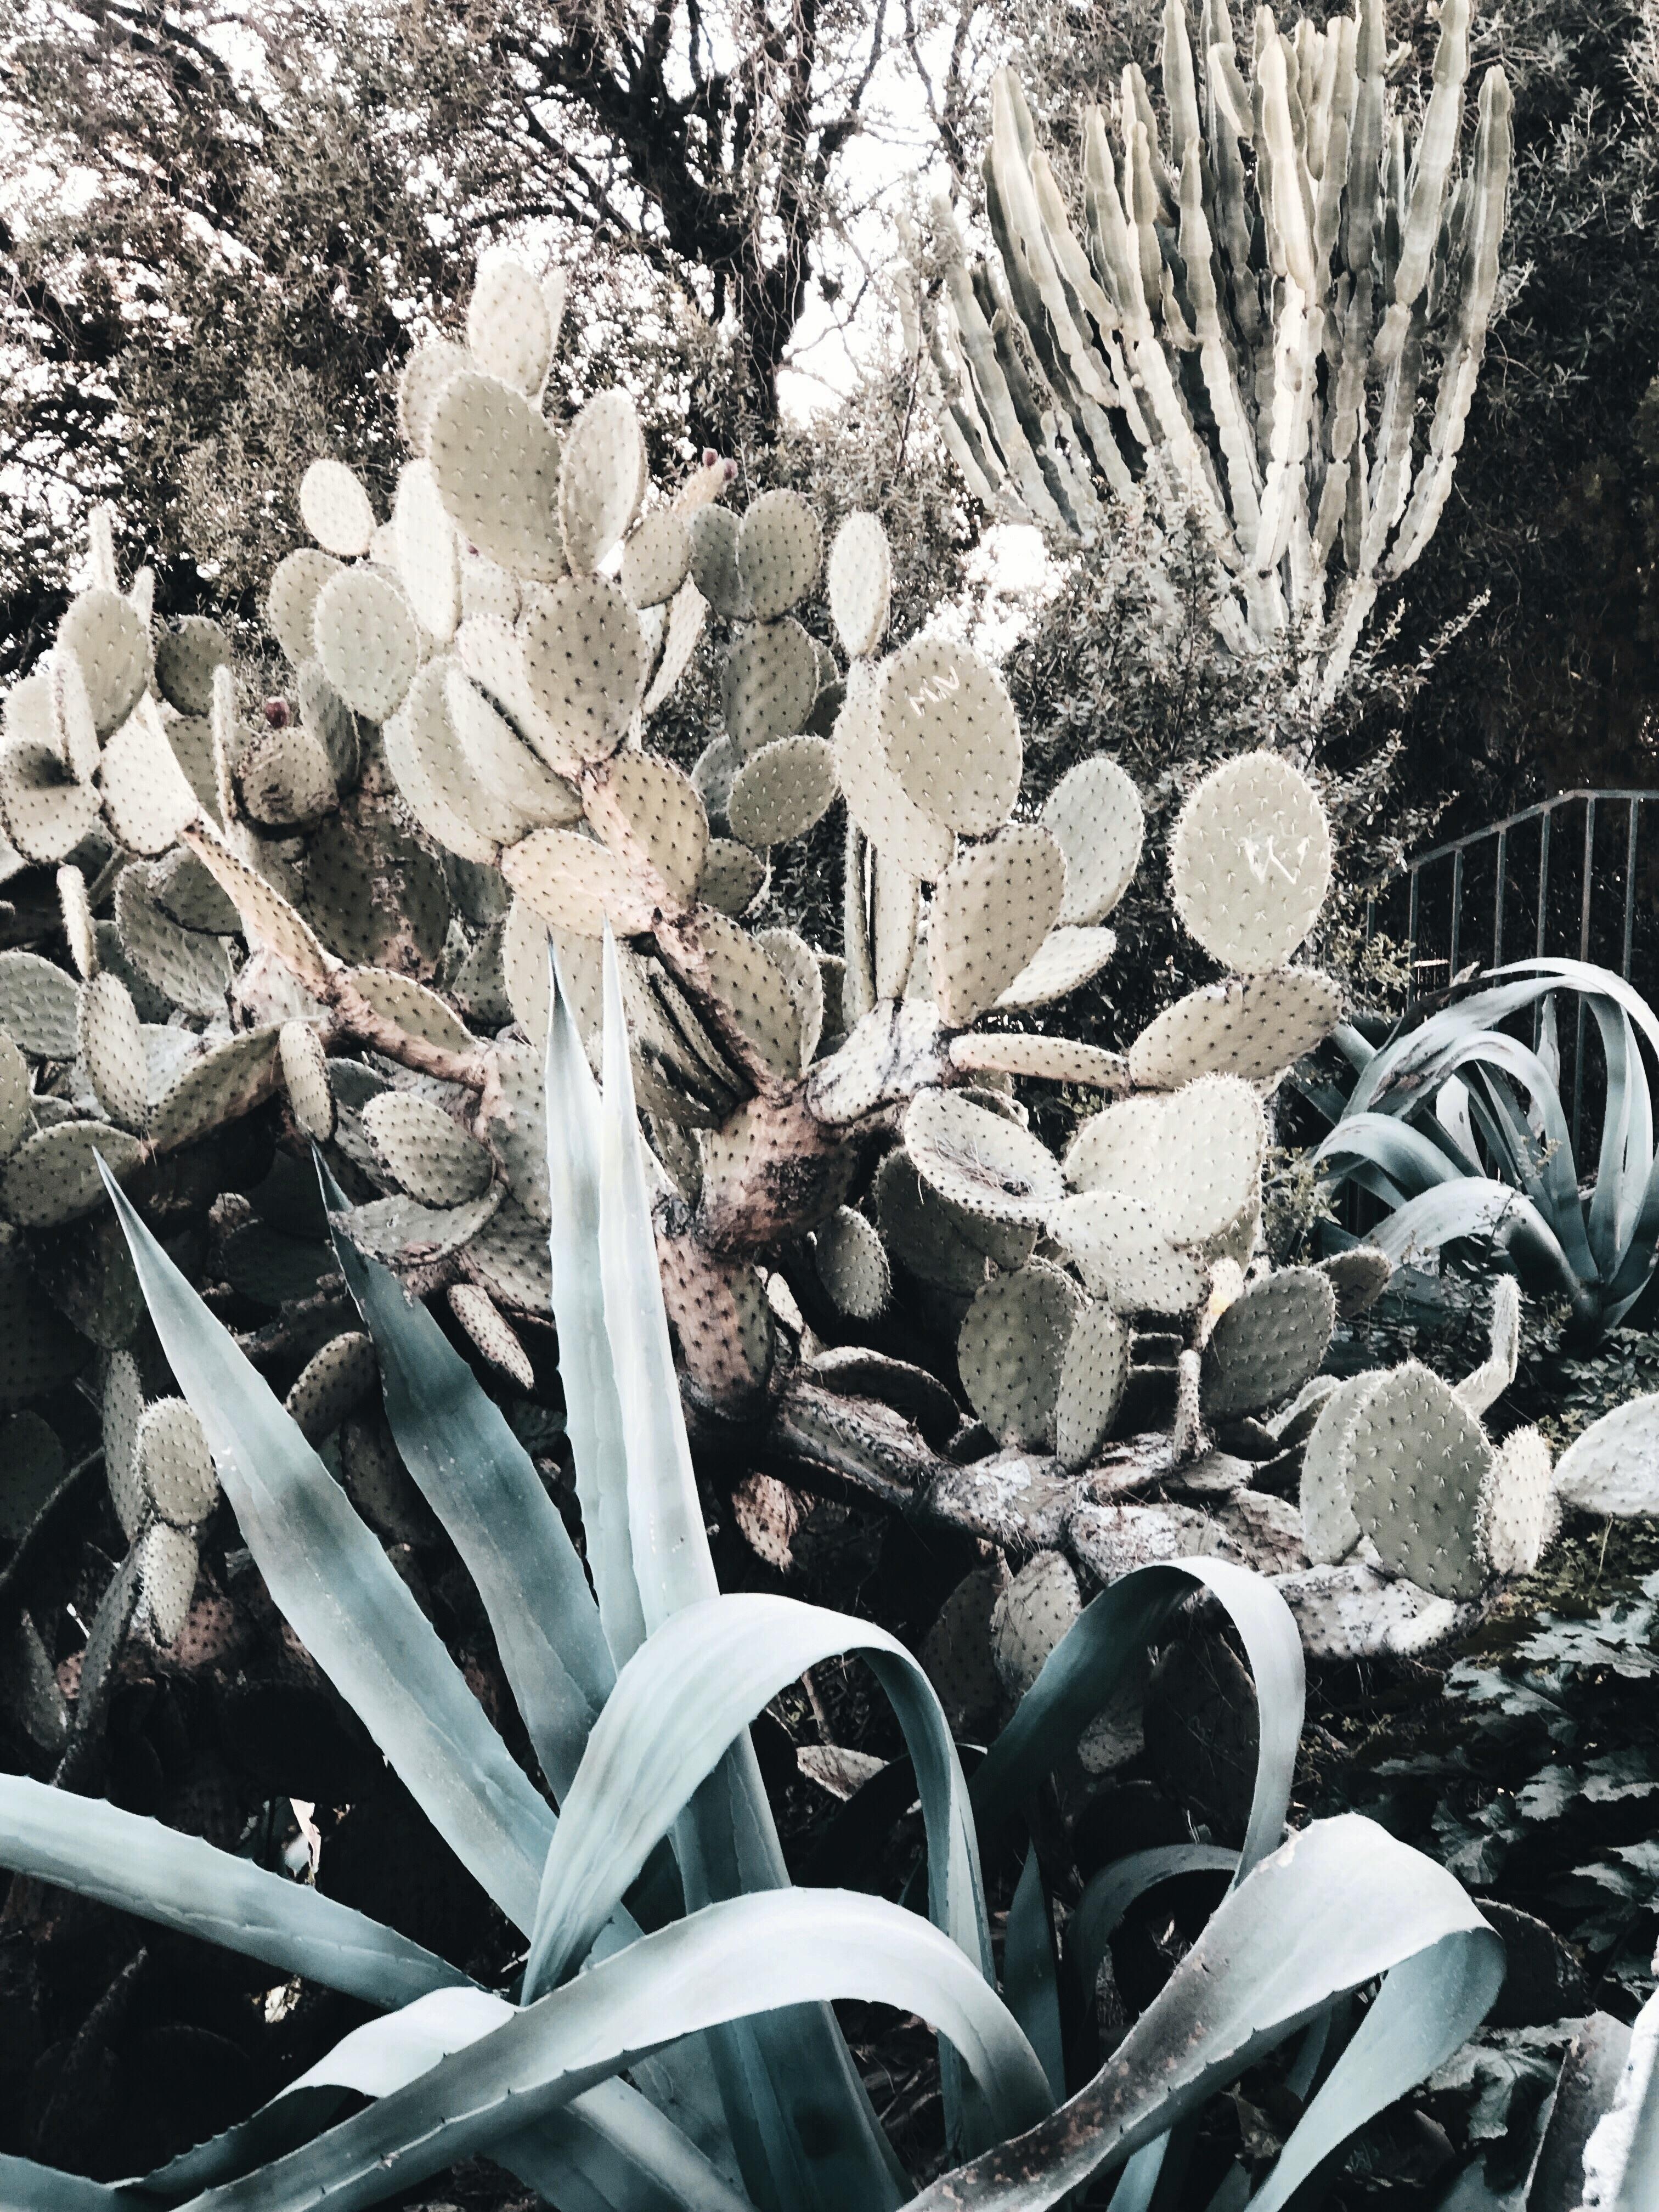 Côte d’Azur #cactuslover #cactusgarden
#plantlove #plantlady #couchstyle